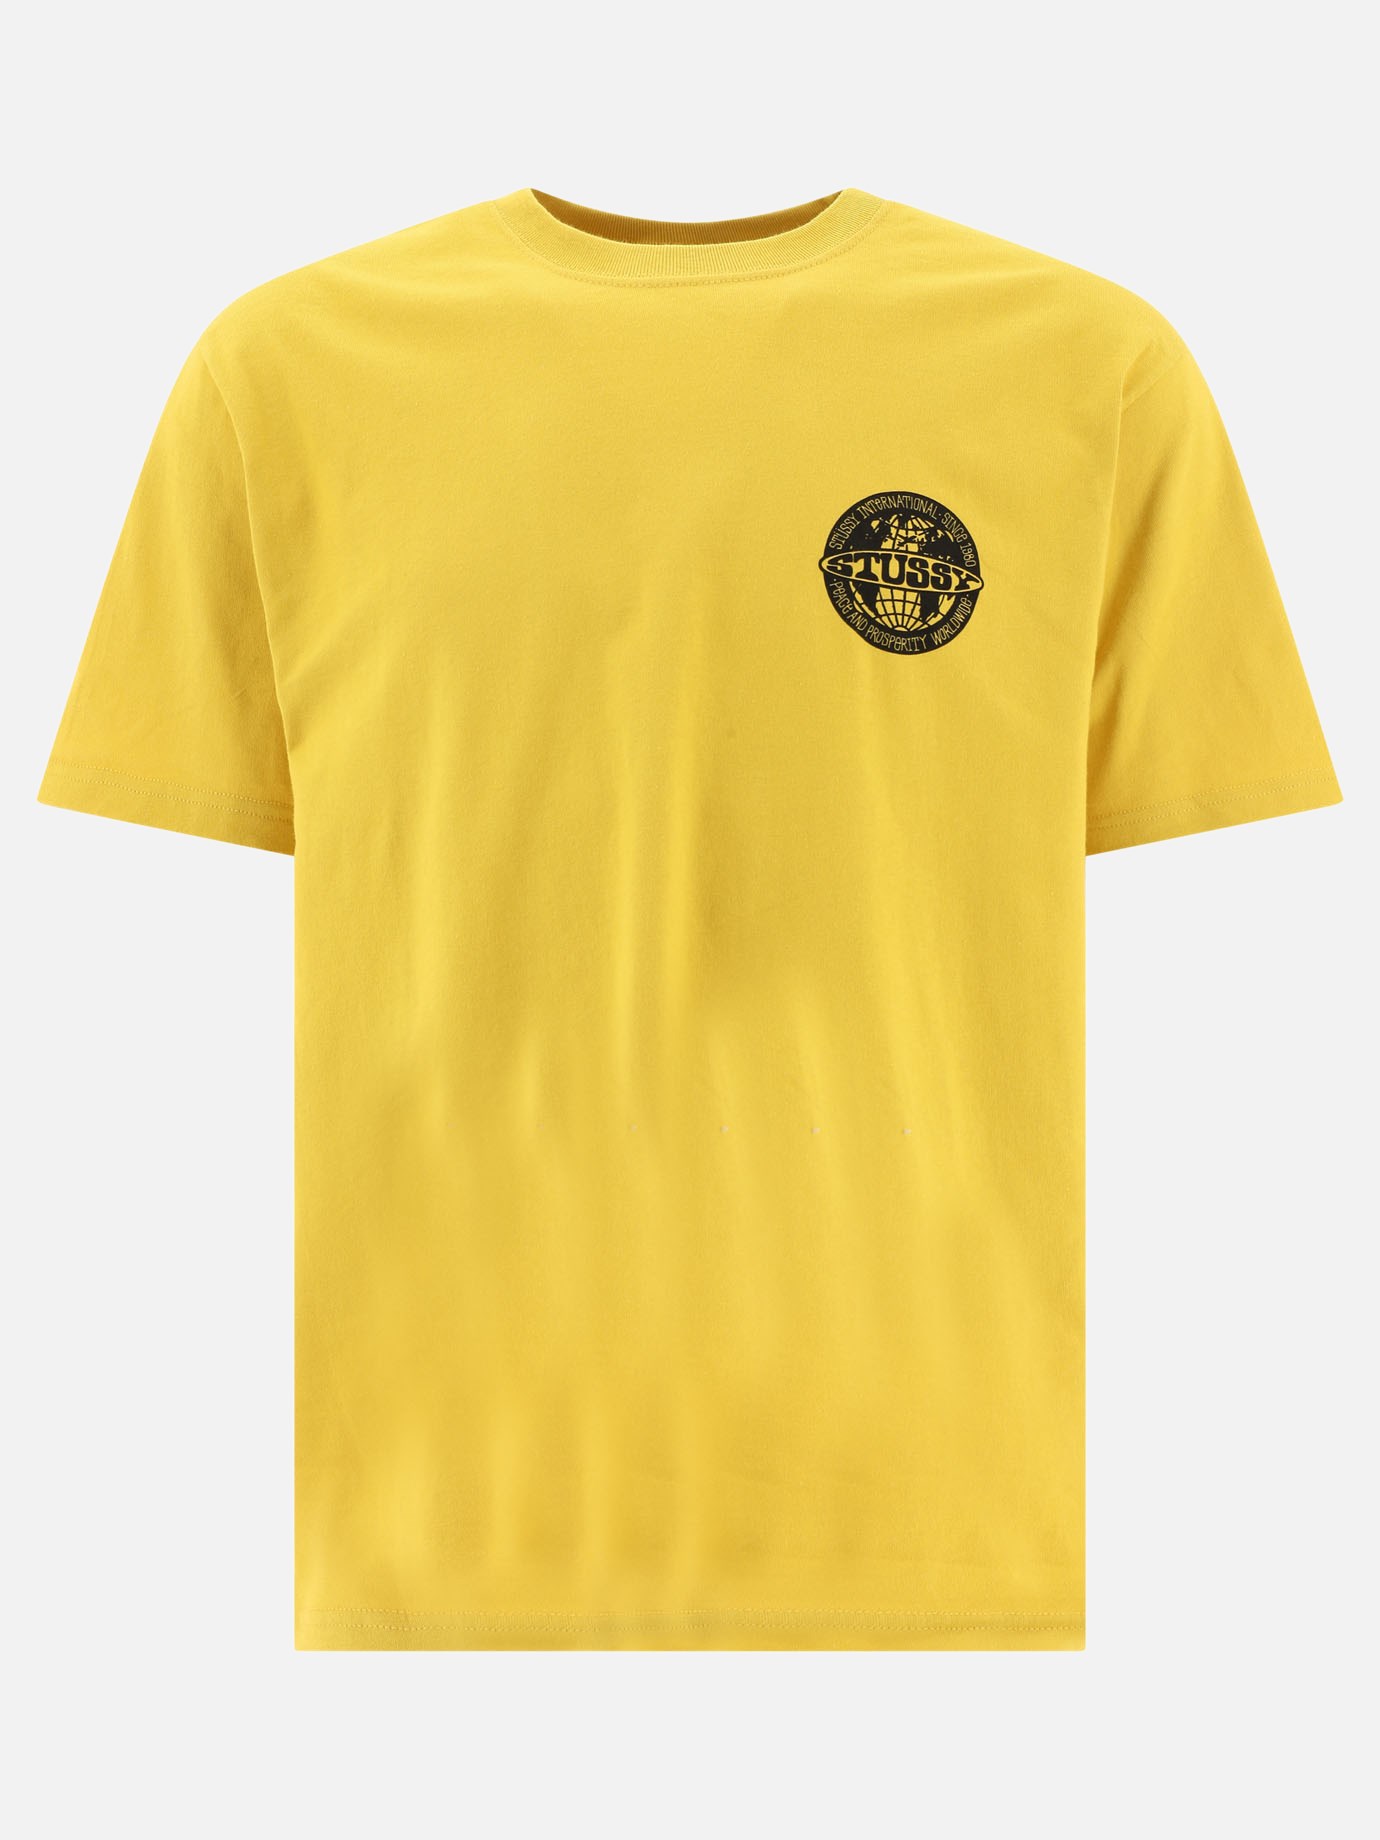 T-shirt  Worldwide Dot by Stüssy - 1